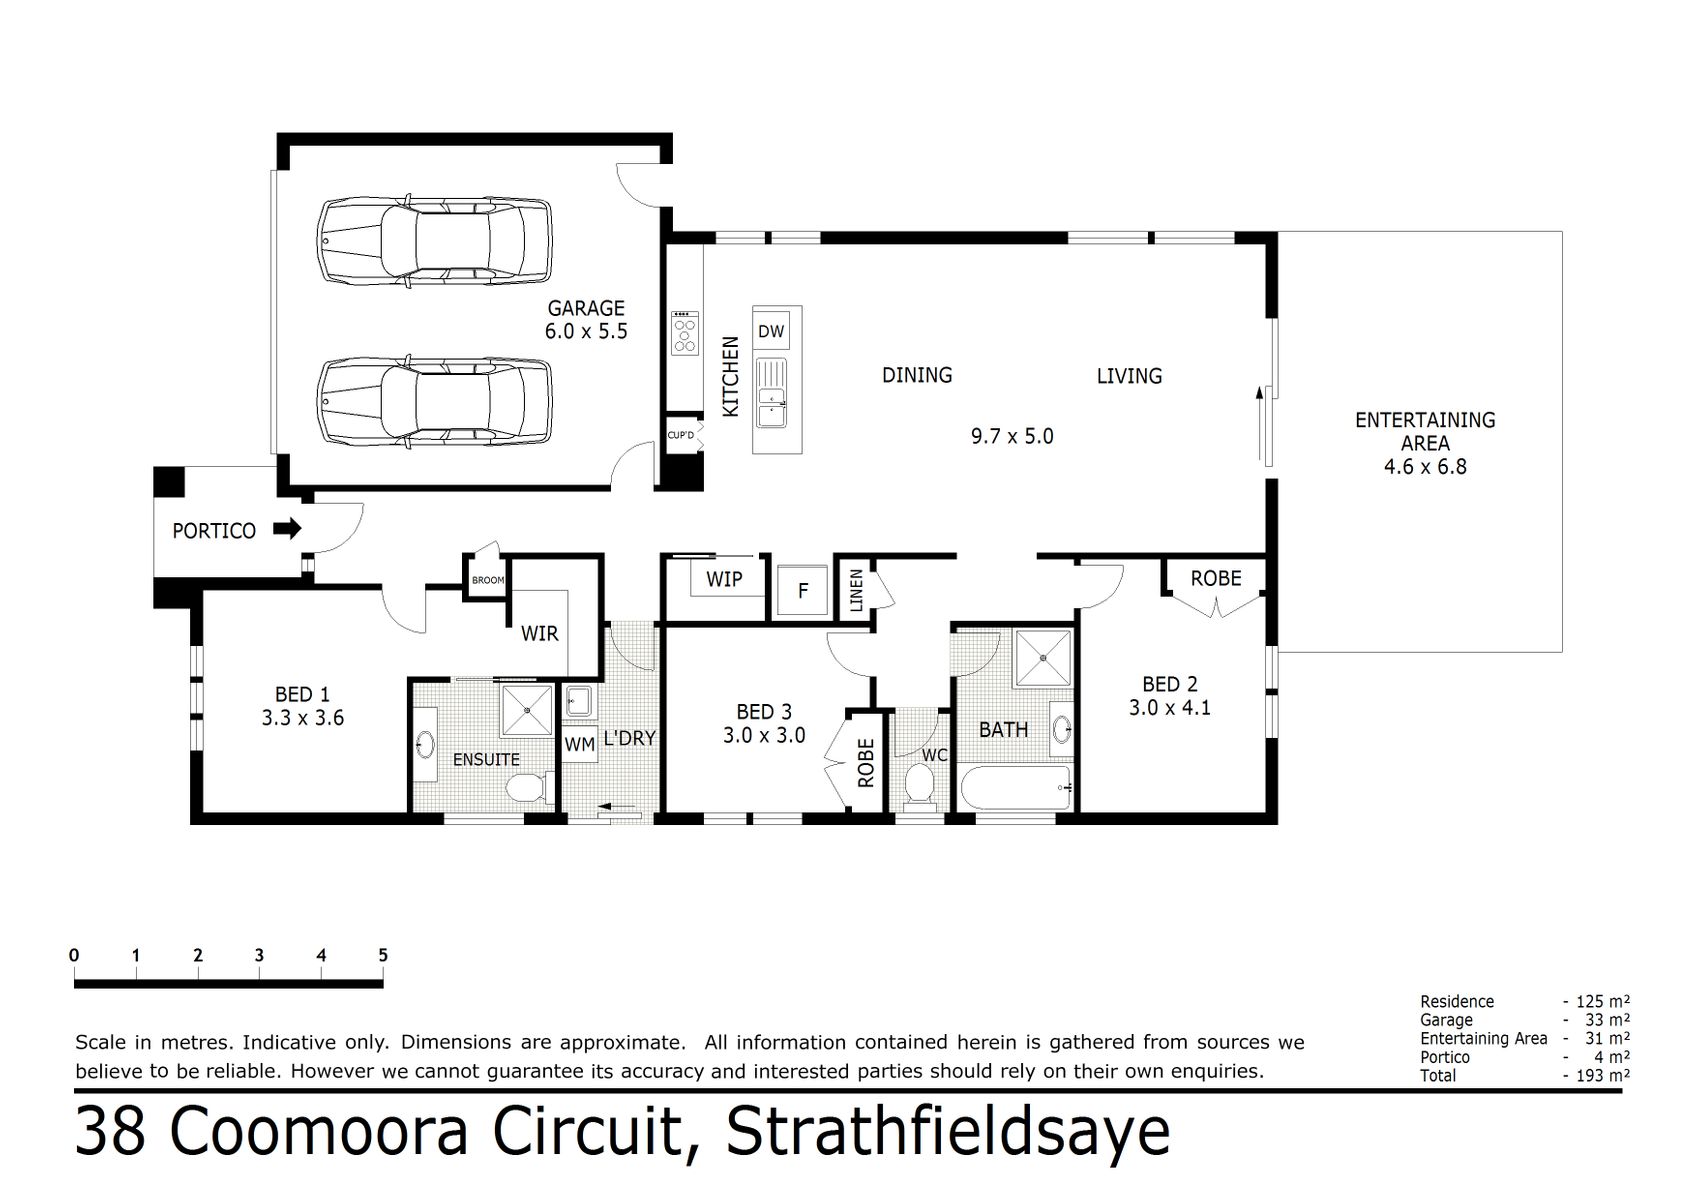 38 Coomoora Circuit Strathfieldsaye (14 SEP 2020) 158sqm